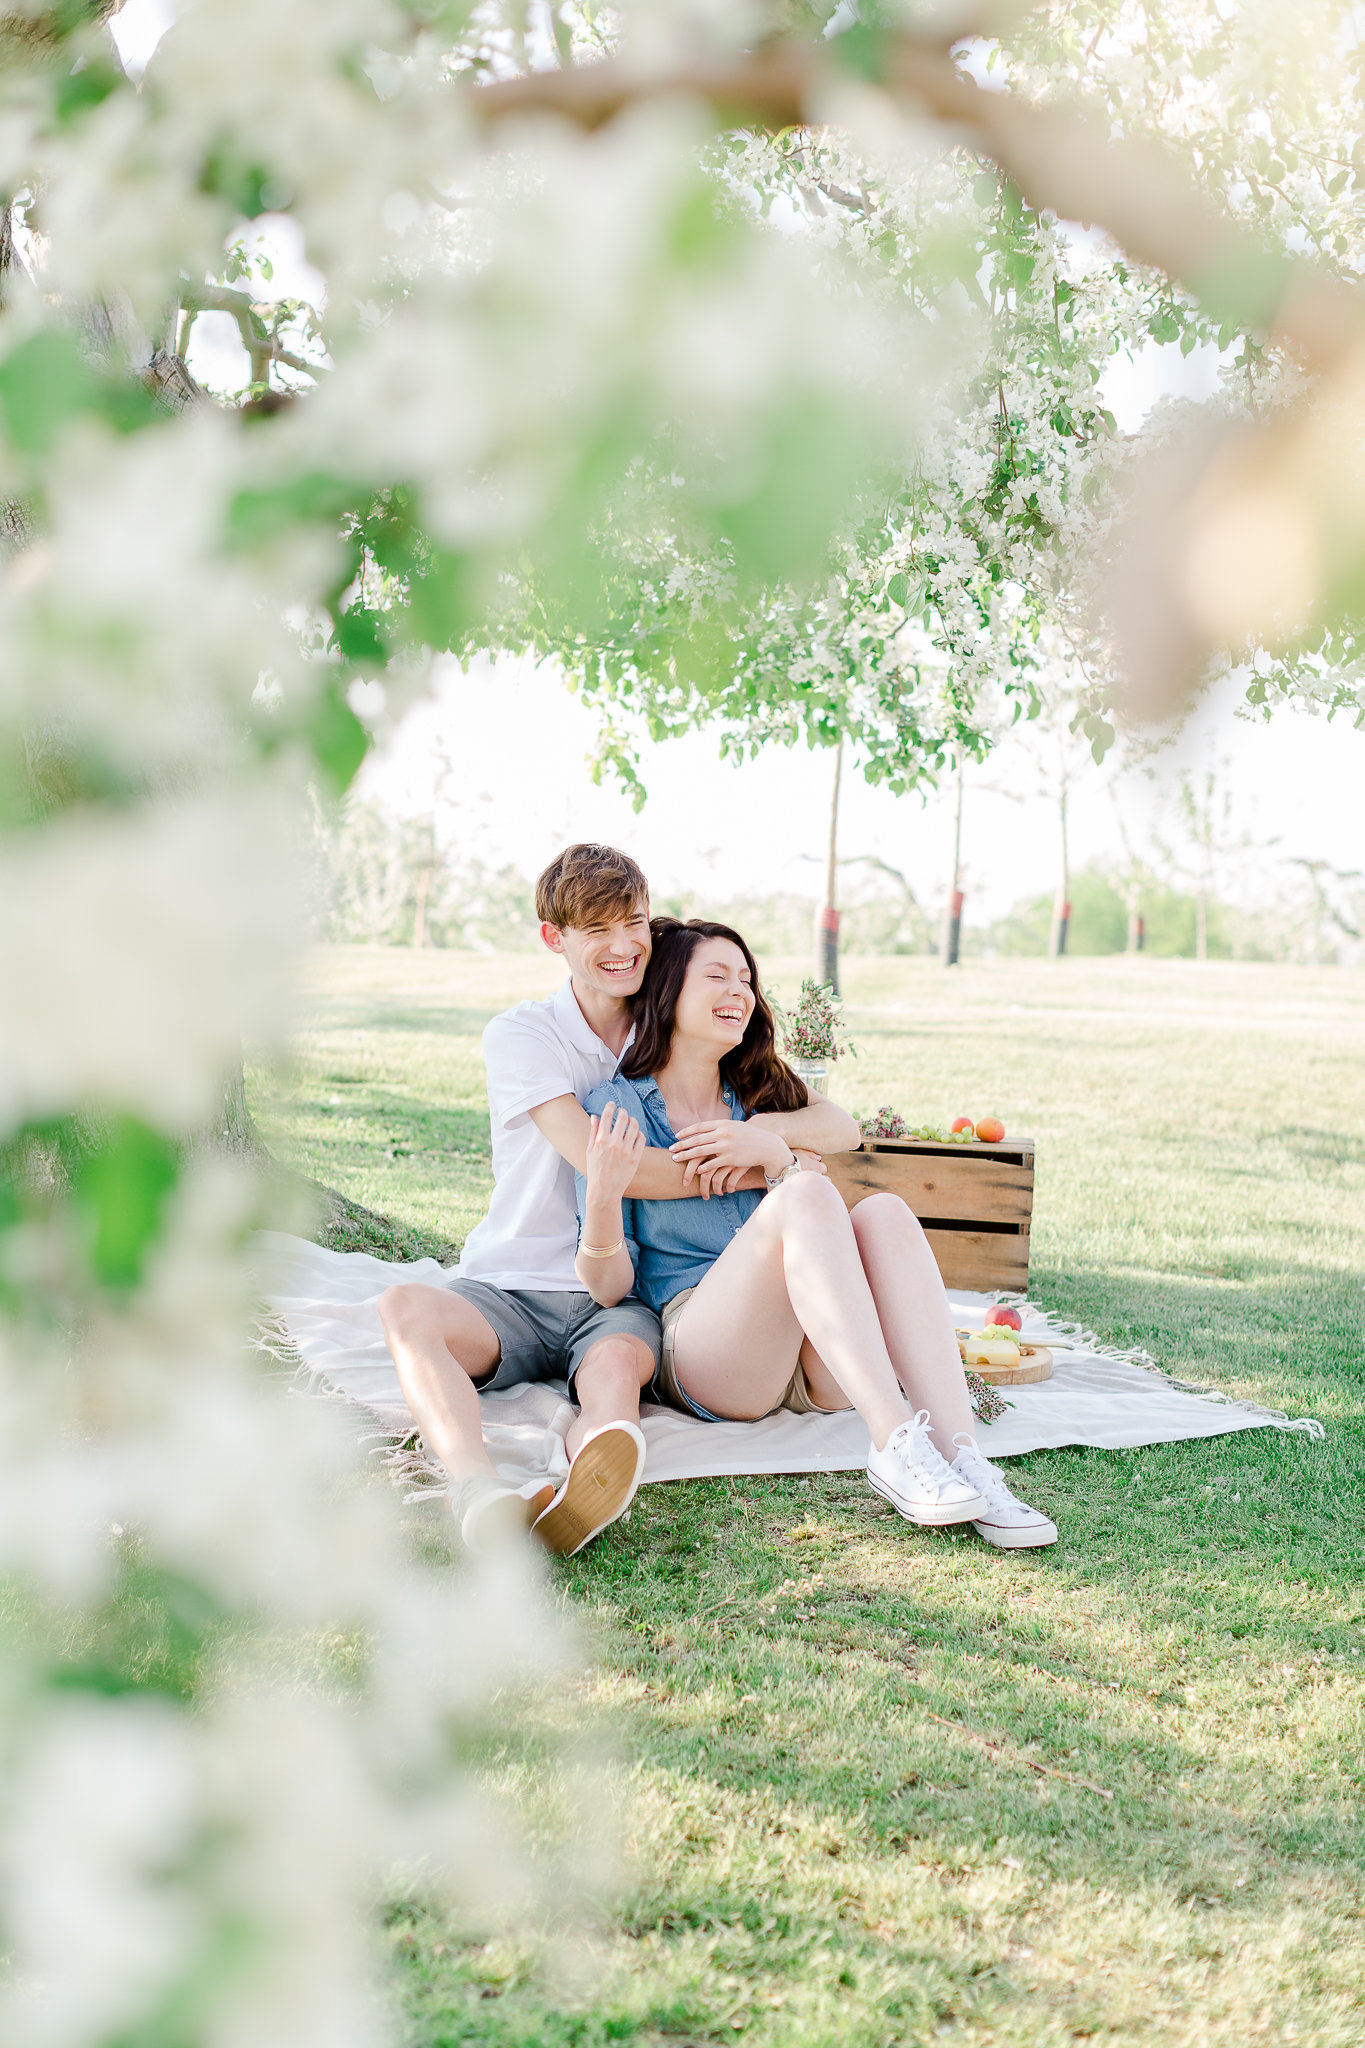 photographe-montreal-demande-en-mariage-lisa-renault-photographie-orchard-wedding-proposal-photographer-30